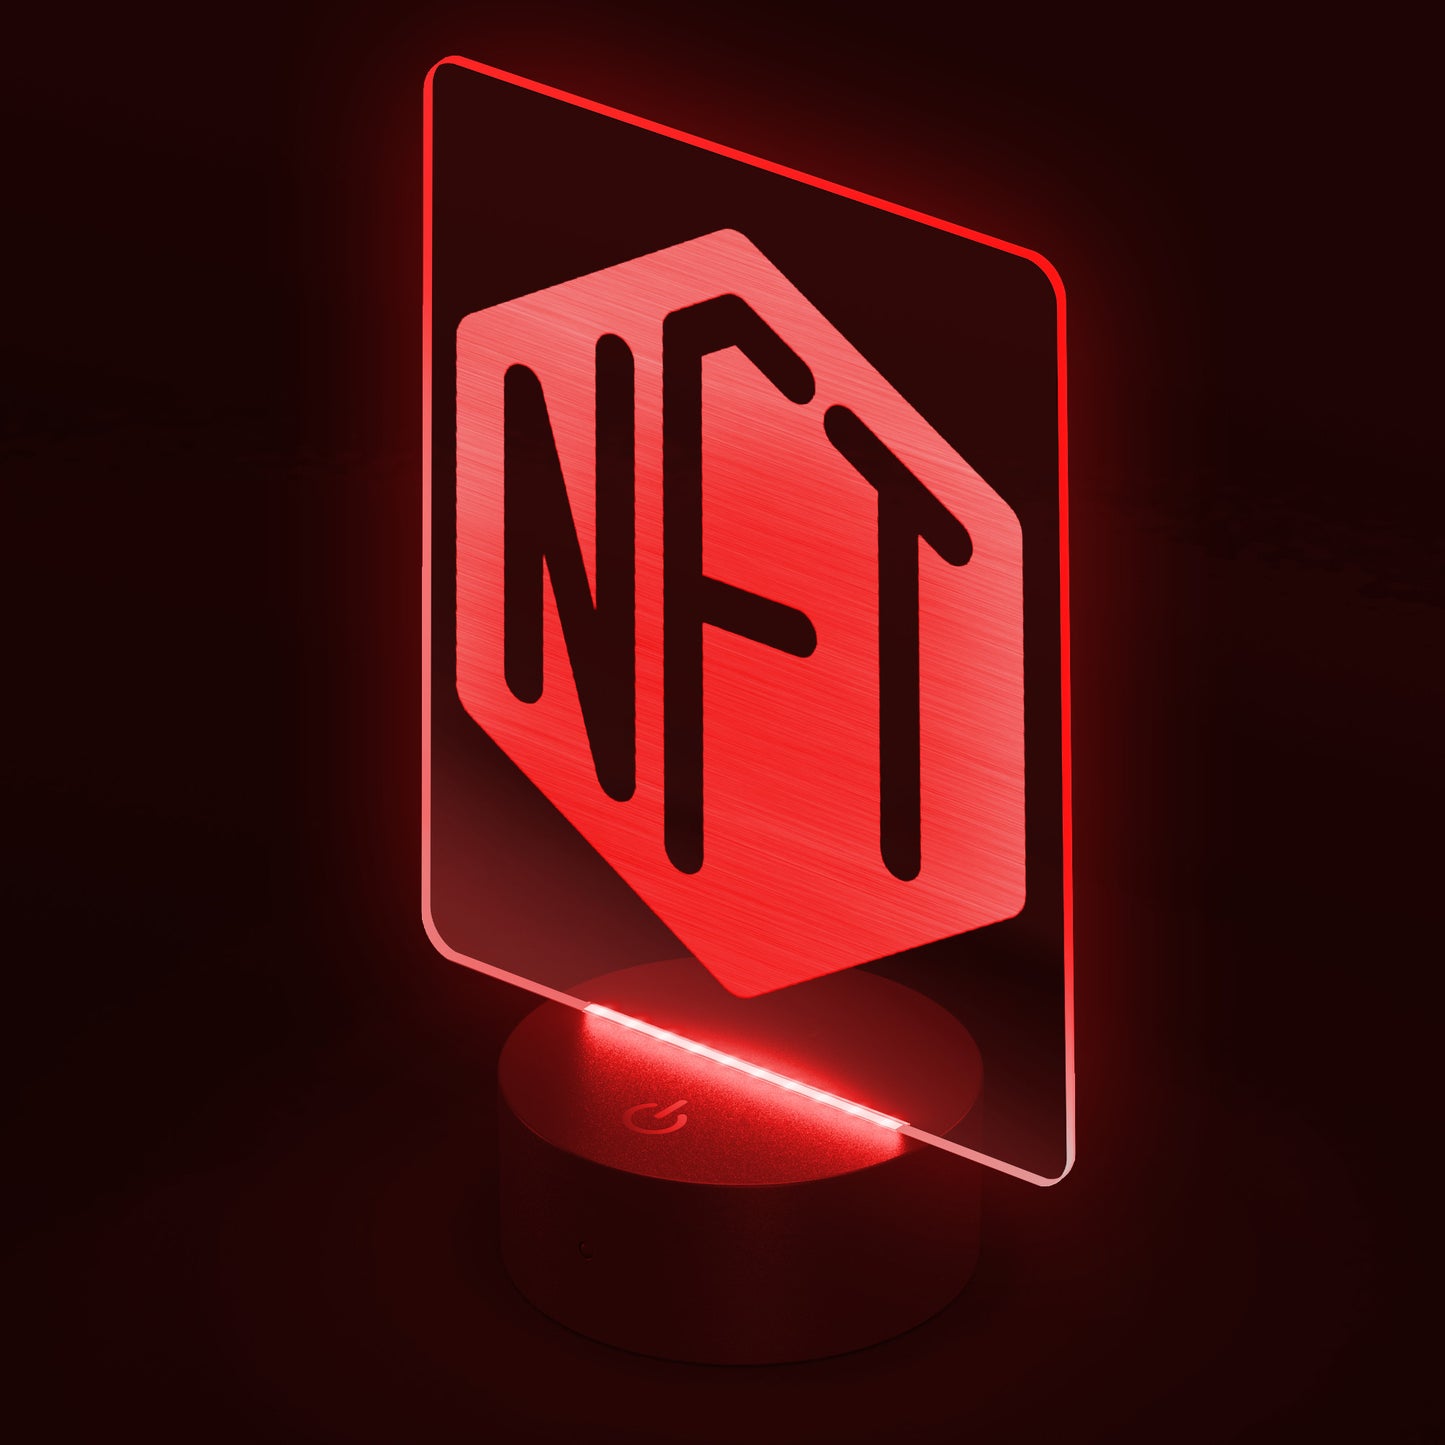 Nft Bold led Sign